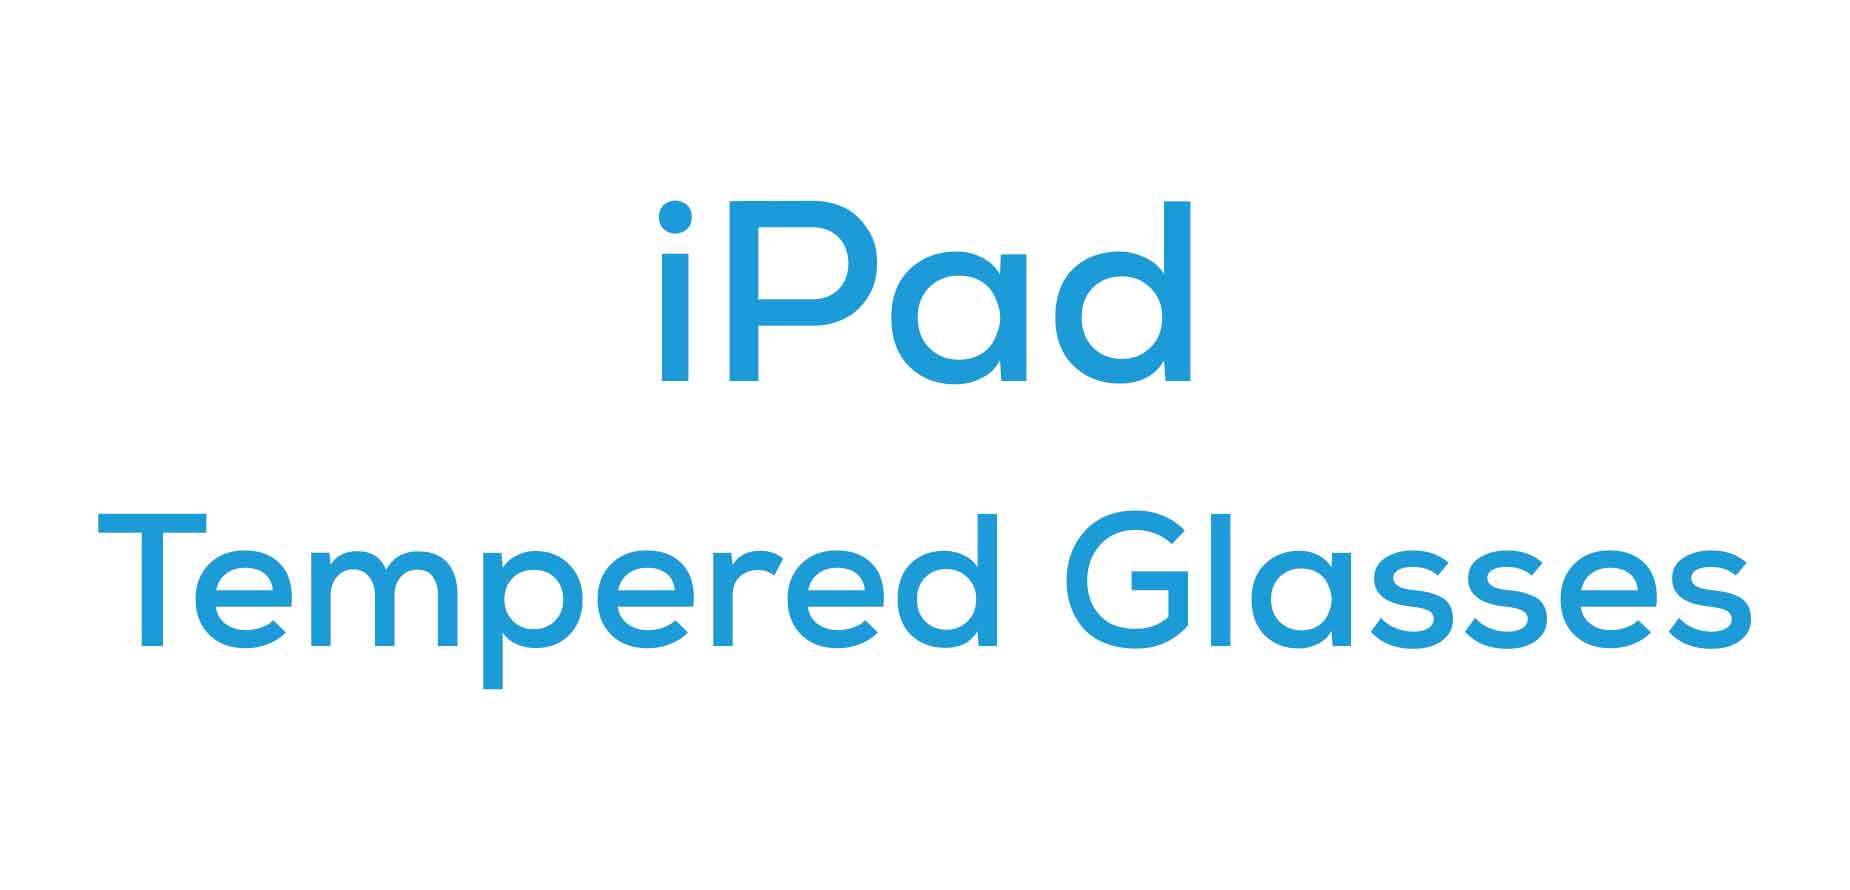 All iPad Tempered Glasses